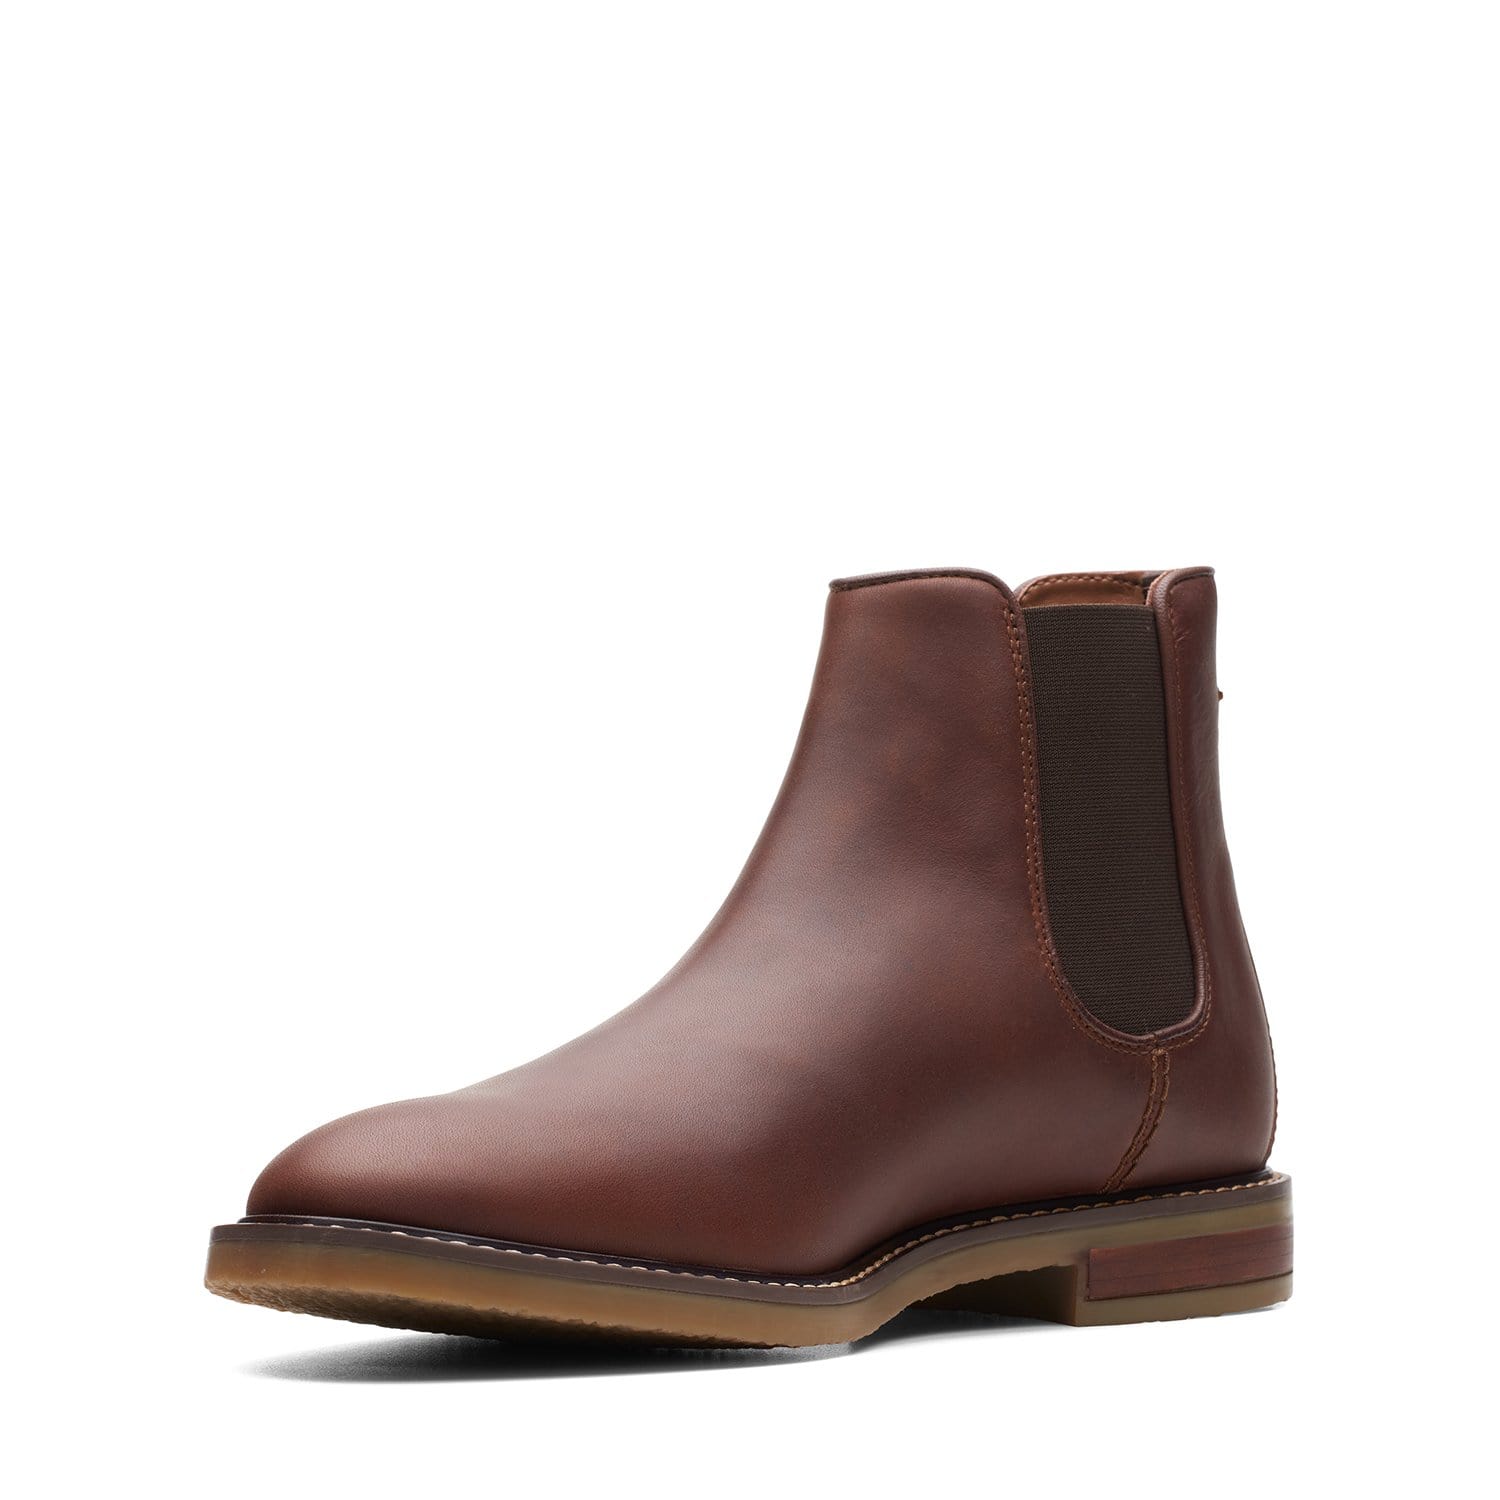 Clarks Jaxen Chelsea - Boots - Tan Leather - 261627427 - G Width (Standard Fit)